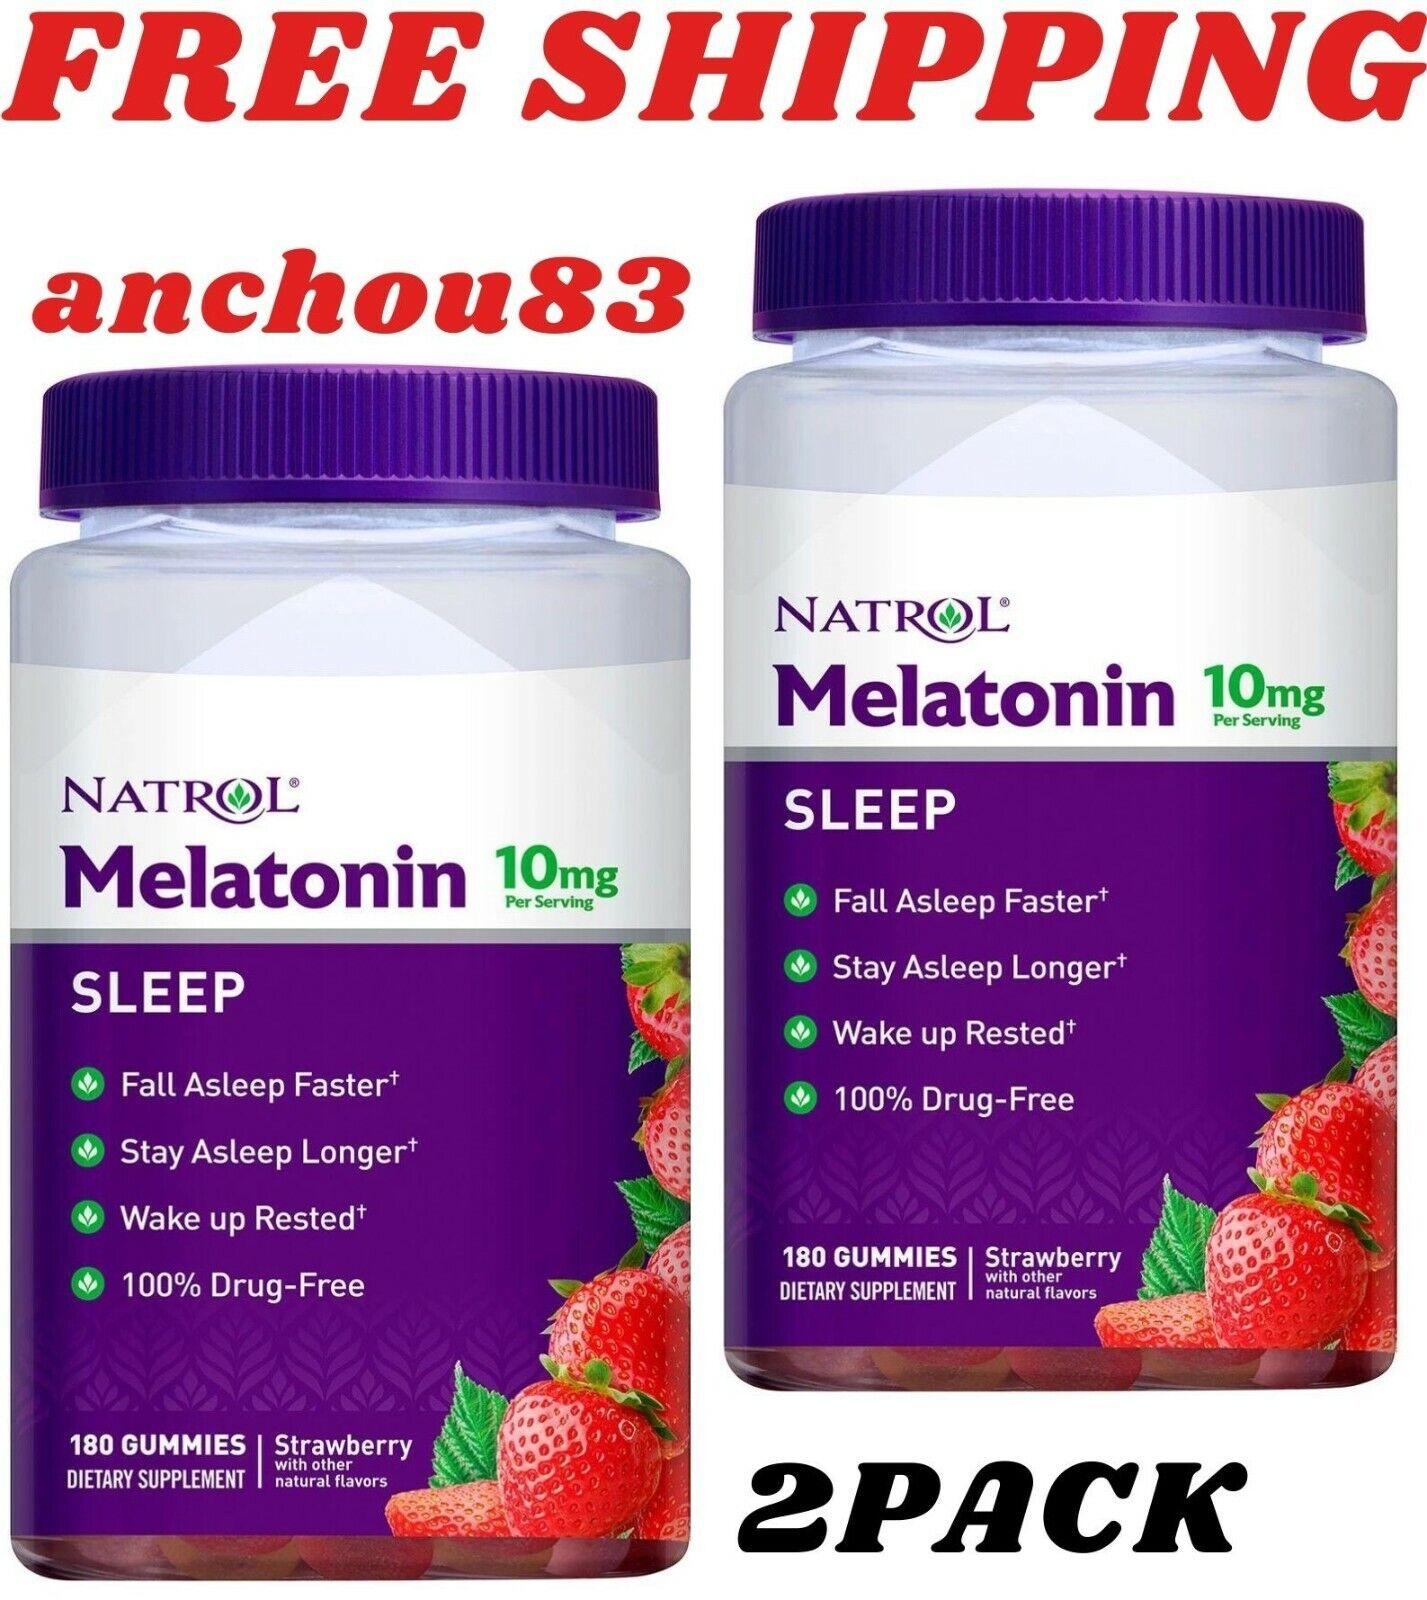 Natrol Melatonin 10mg Gummies (180 ct.) 2 PACK free shipping